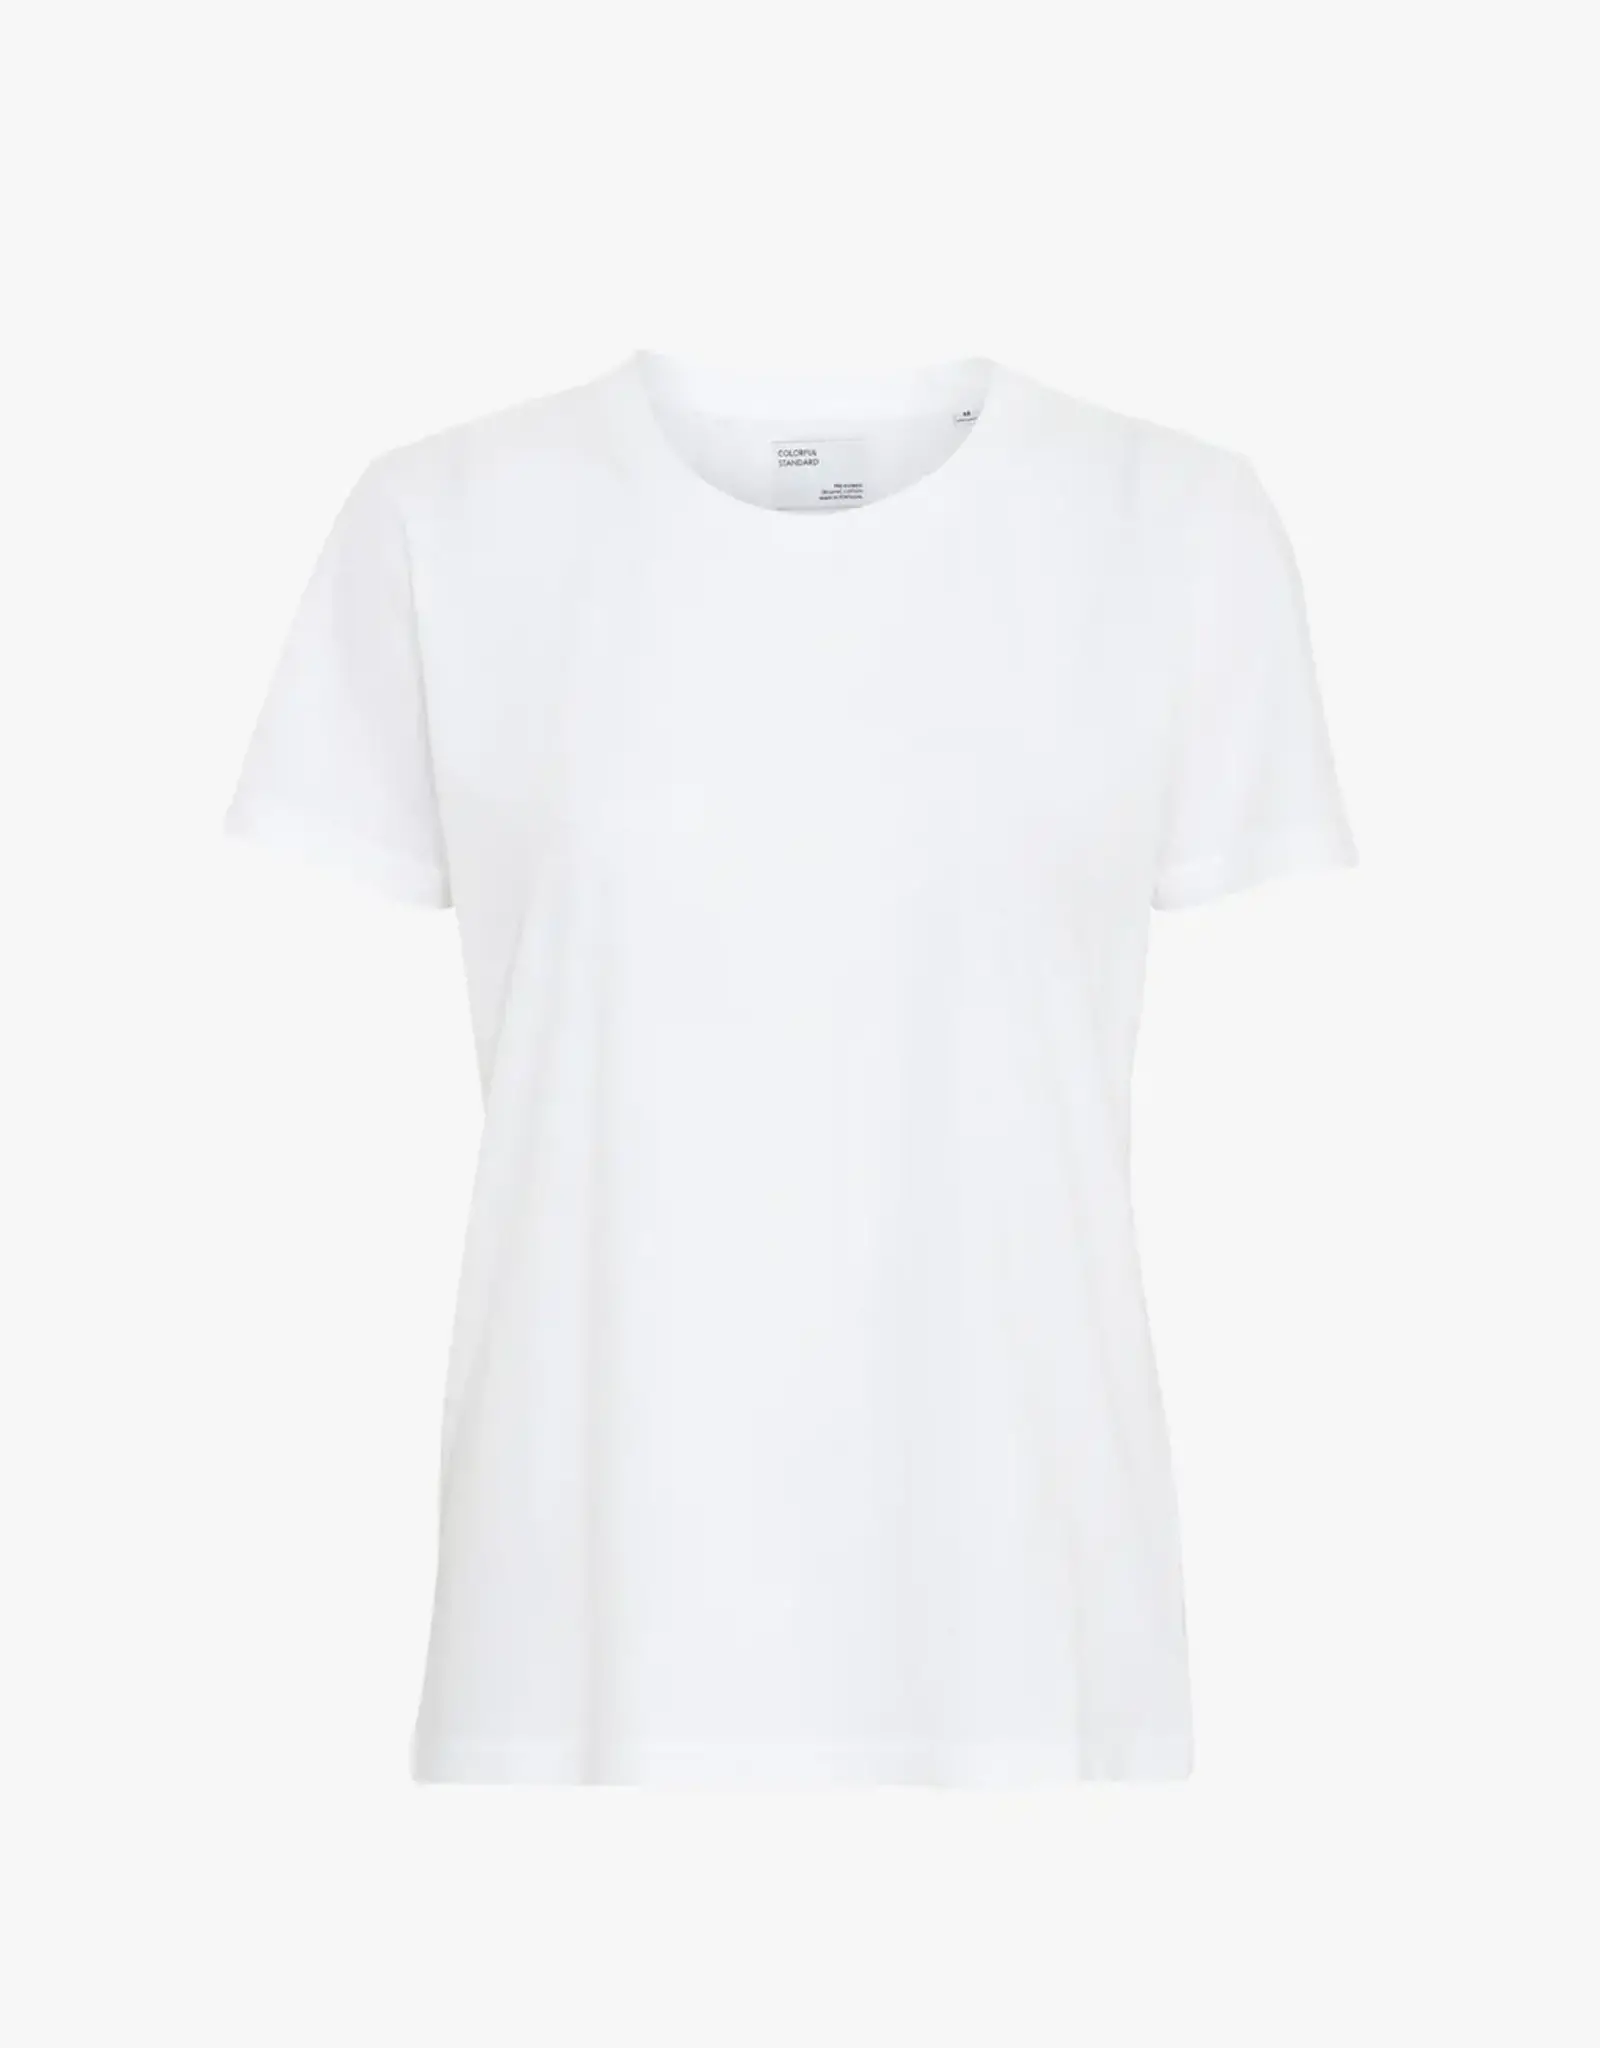 Colorful Standard T-Shirt 'Light Organic' - Optical White - Colorful Standard